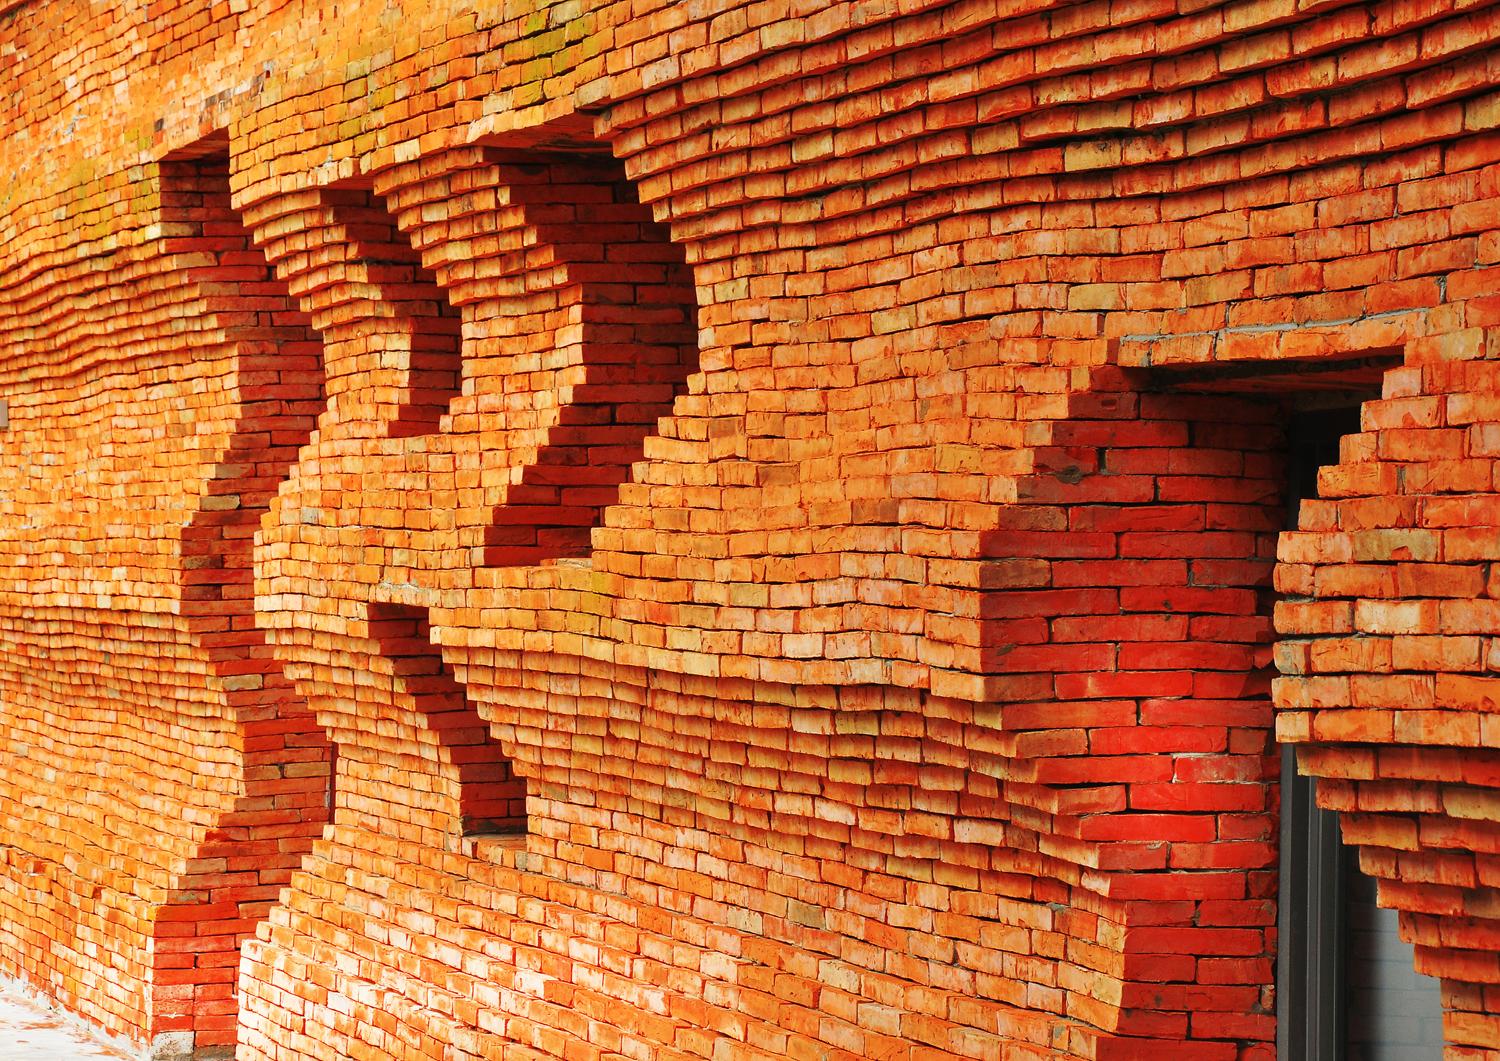 Kantana Film and Animation Institute - Handmade brick walls